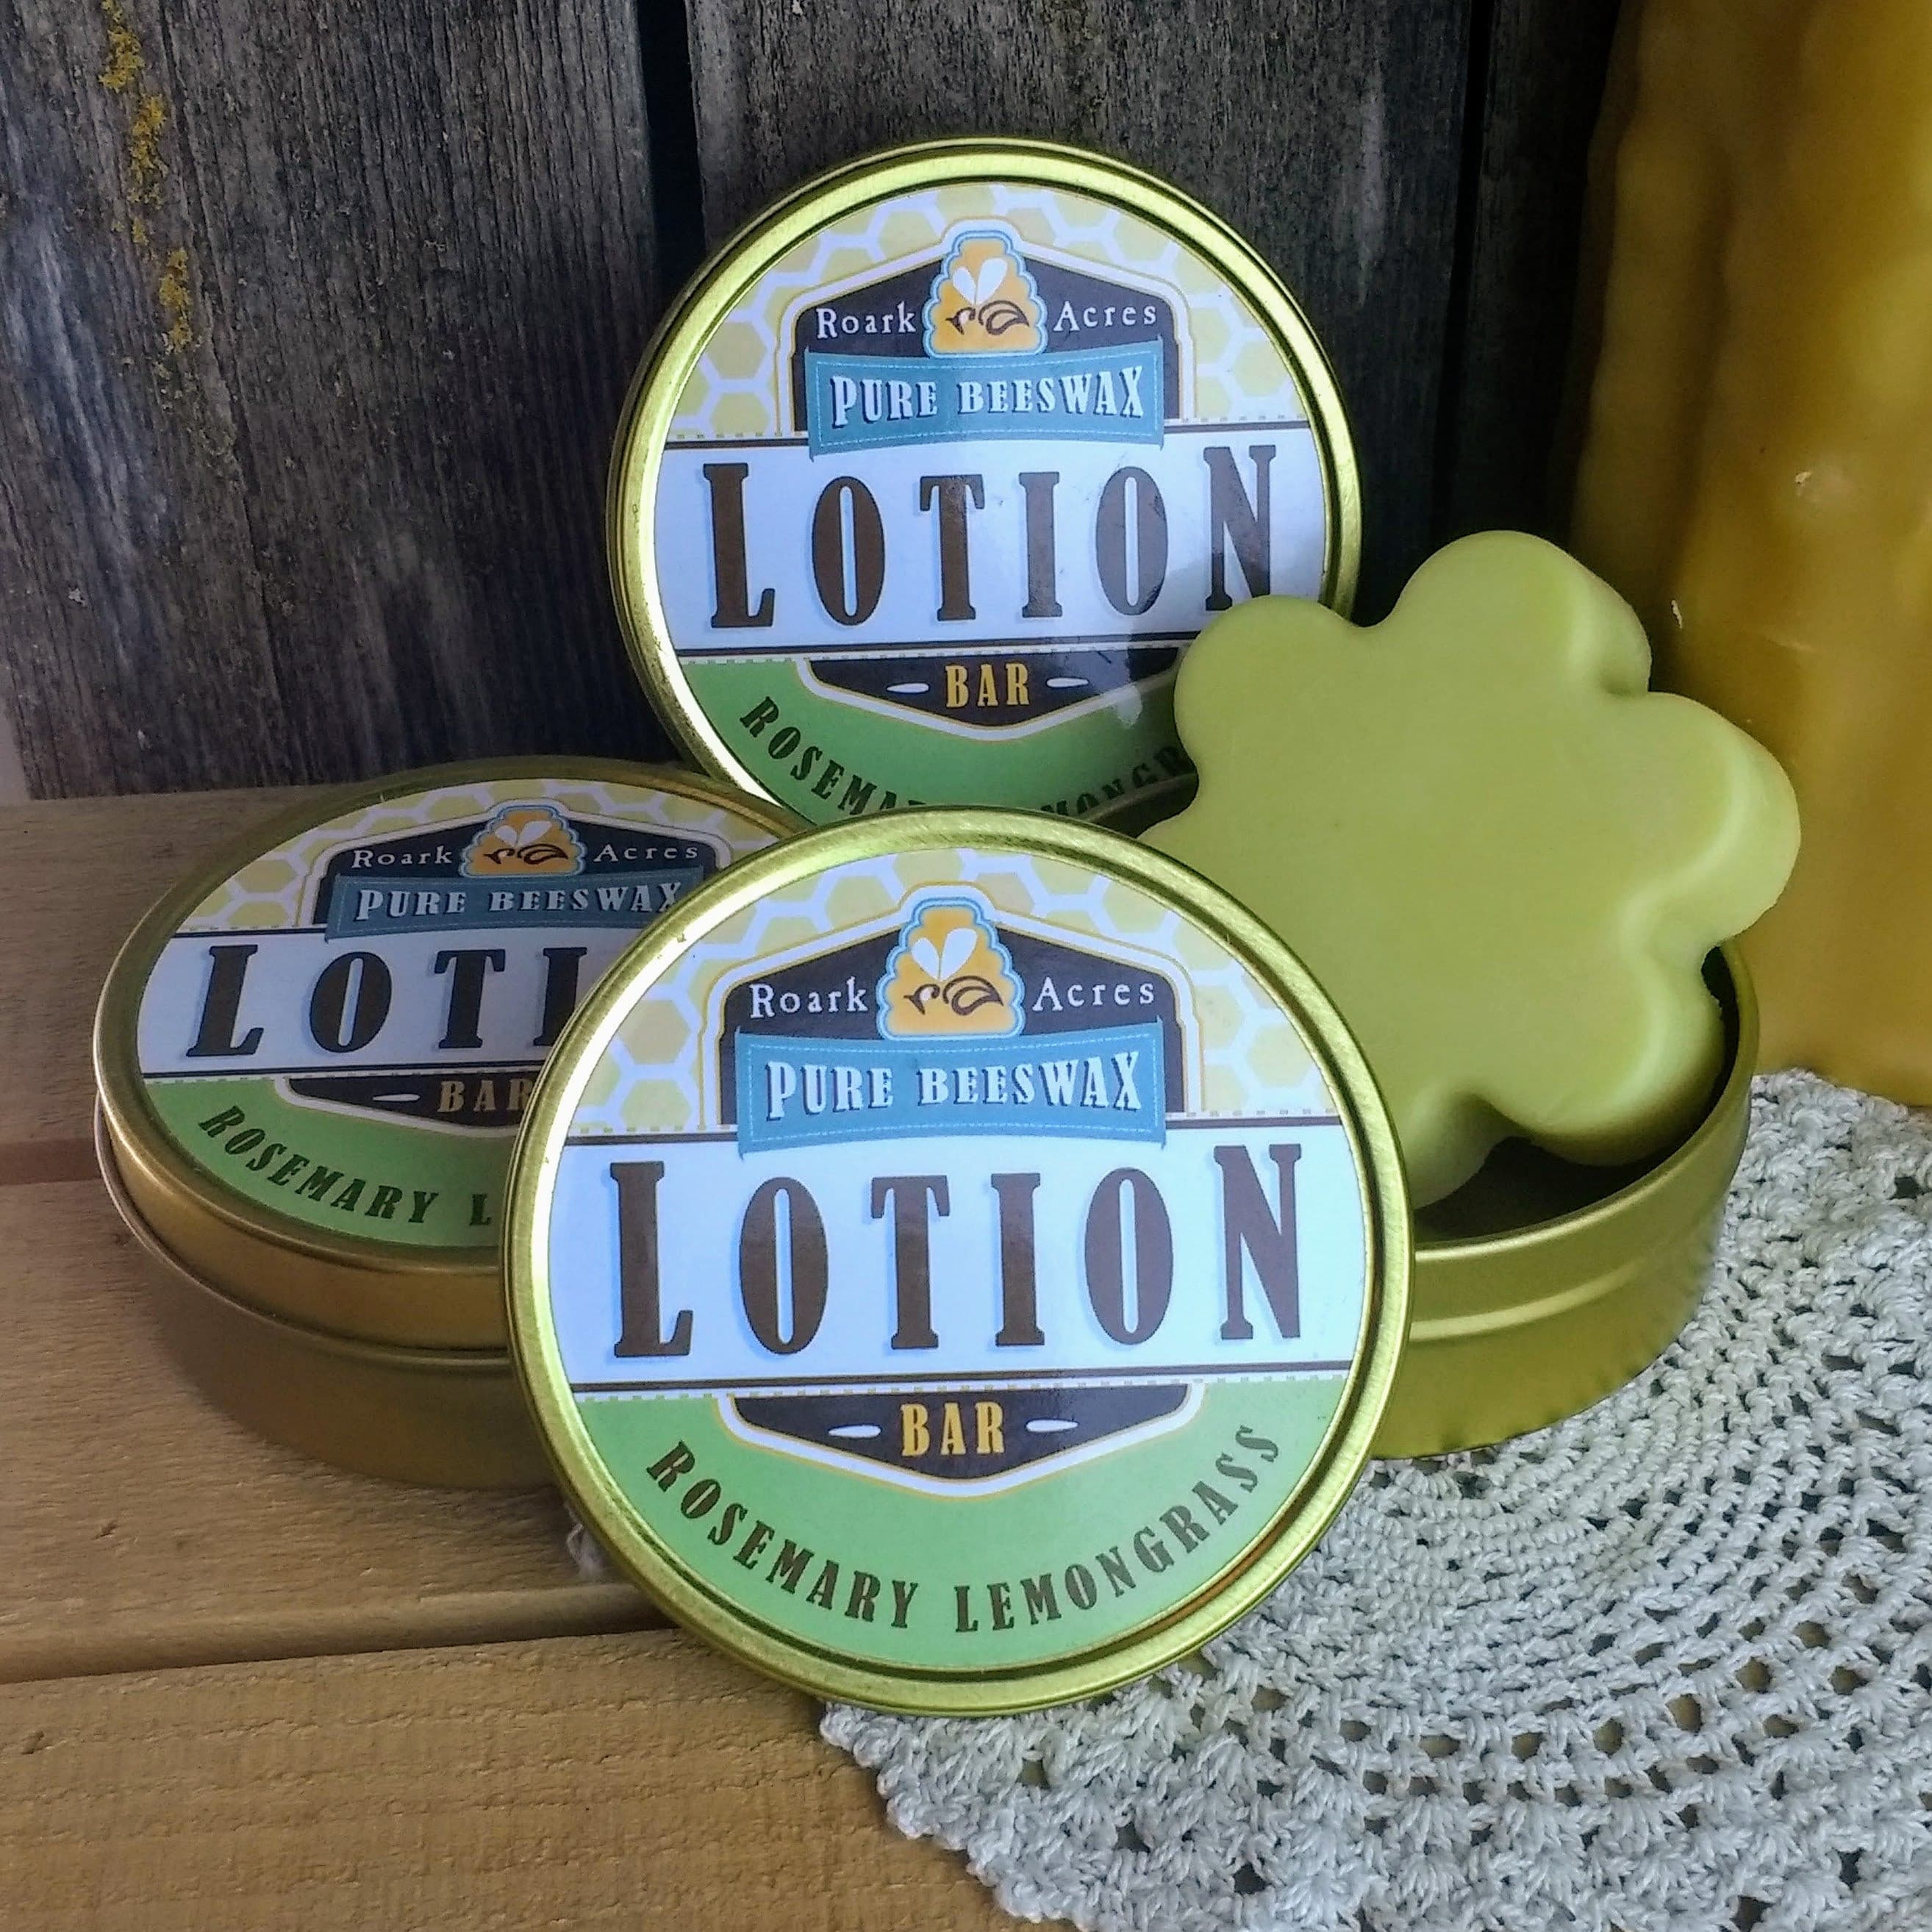 6 oz Beeswax Lotion — Texas Bee Supply